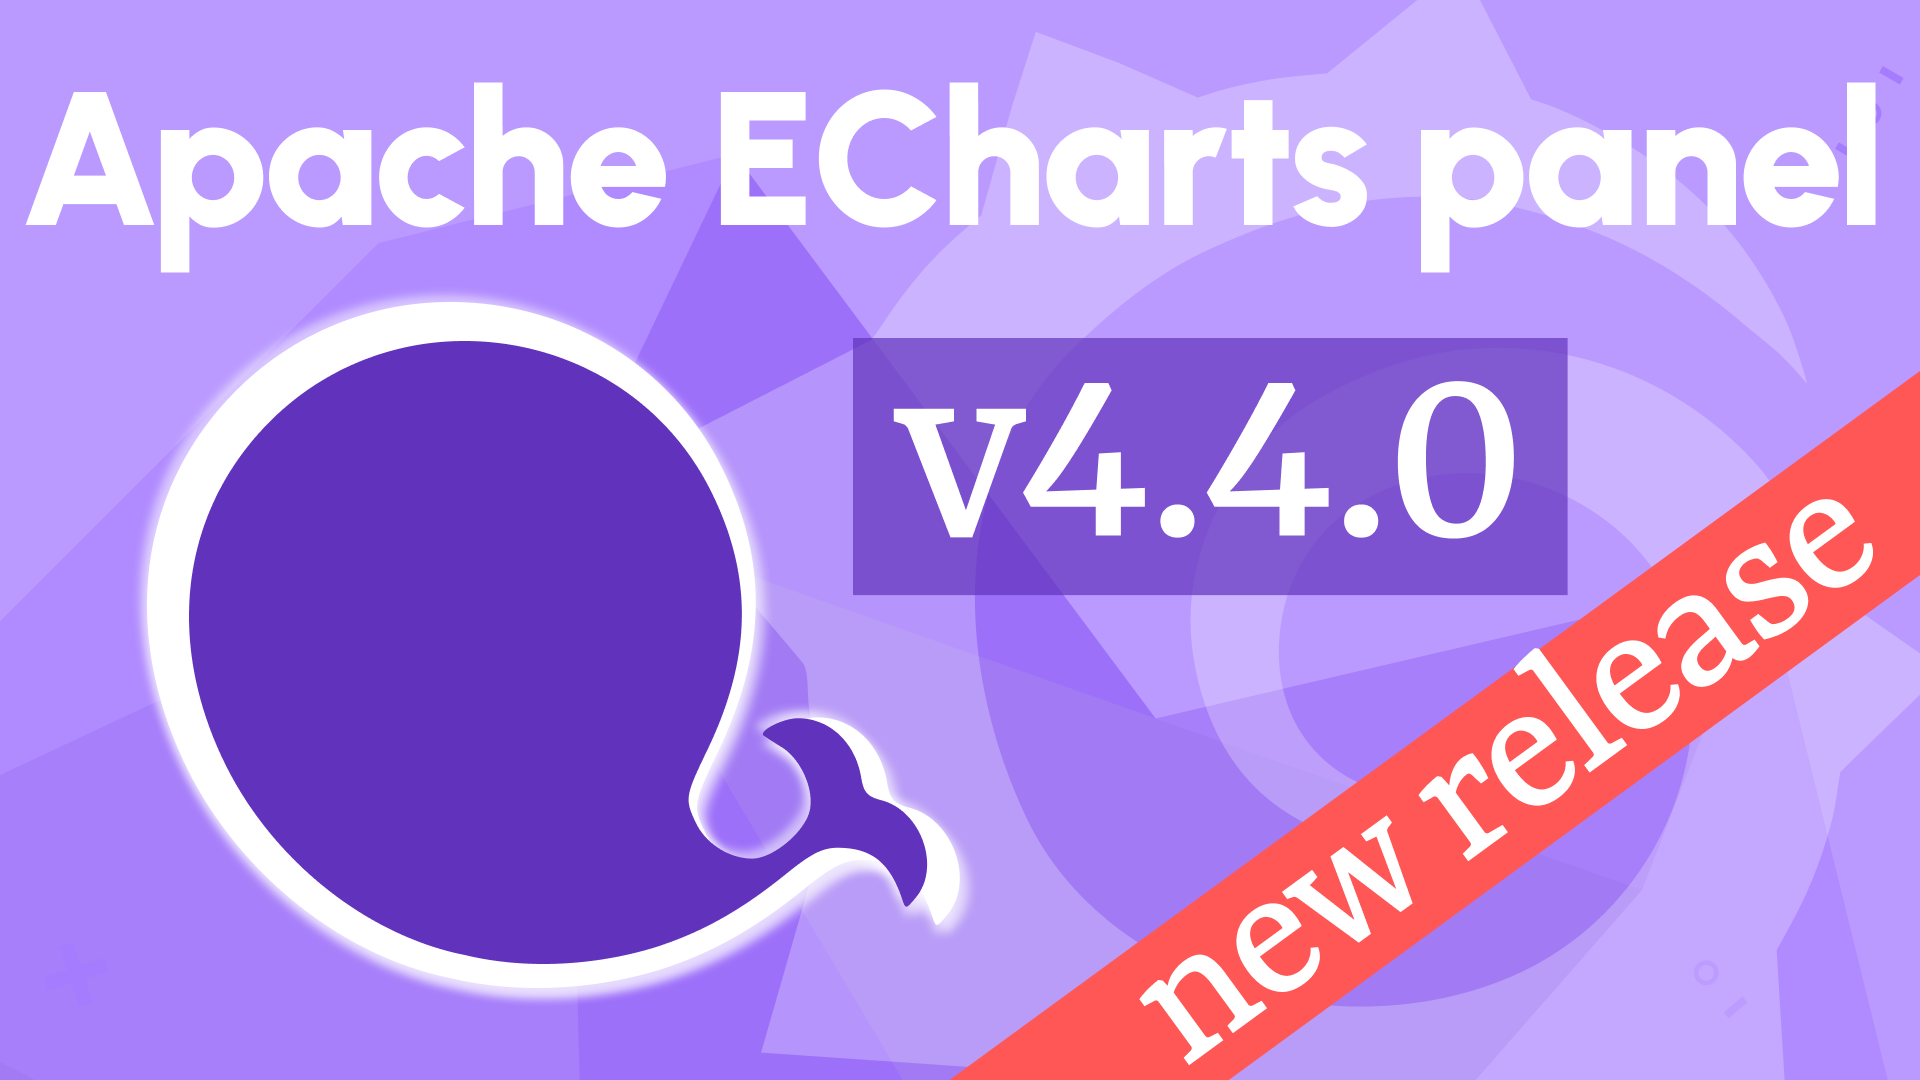 Apache ECharts Panel 4.4.0